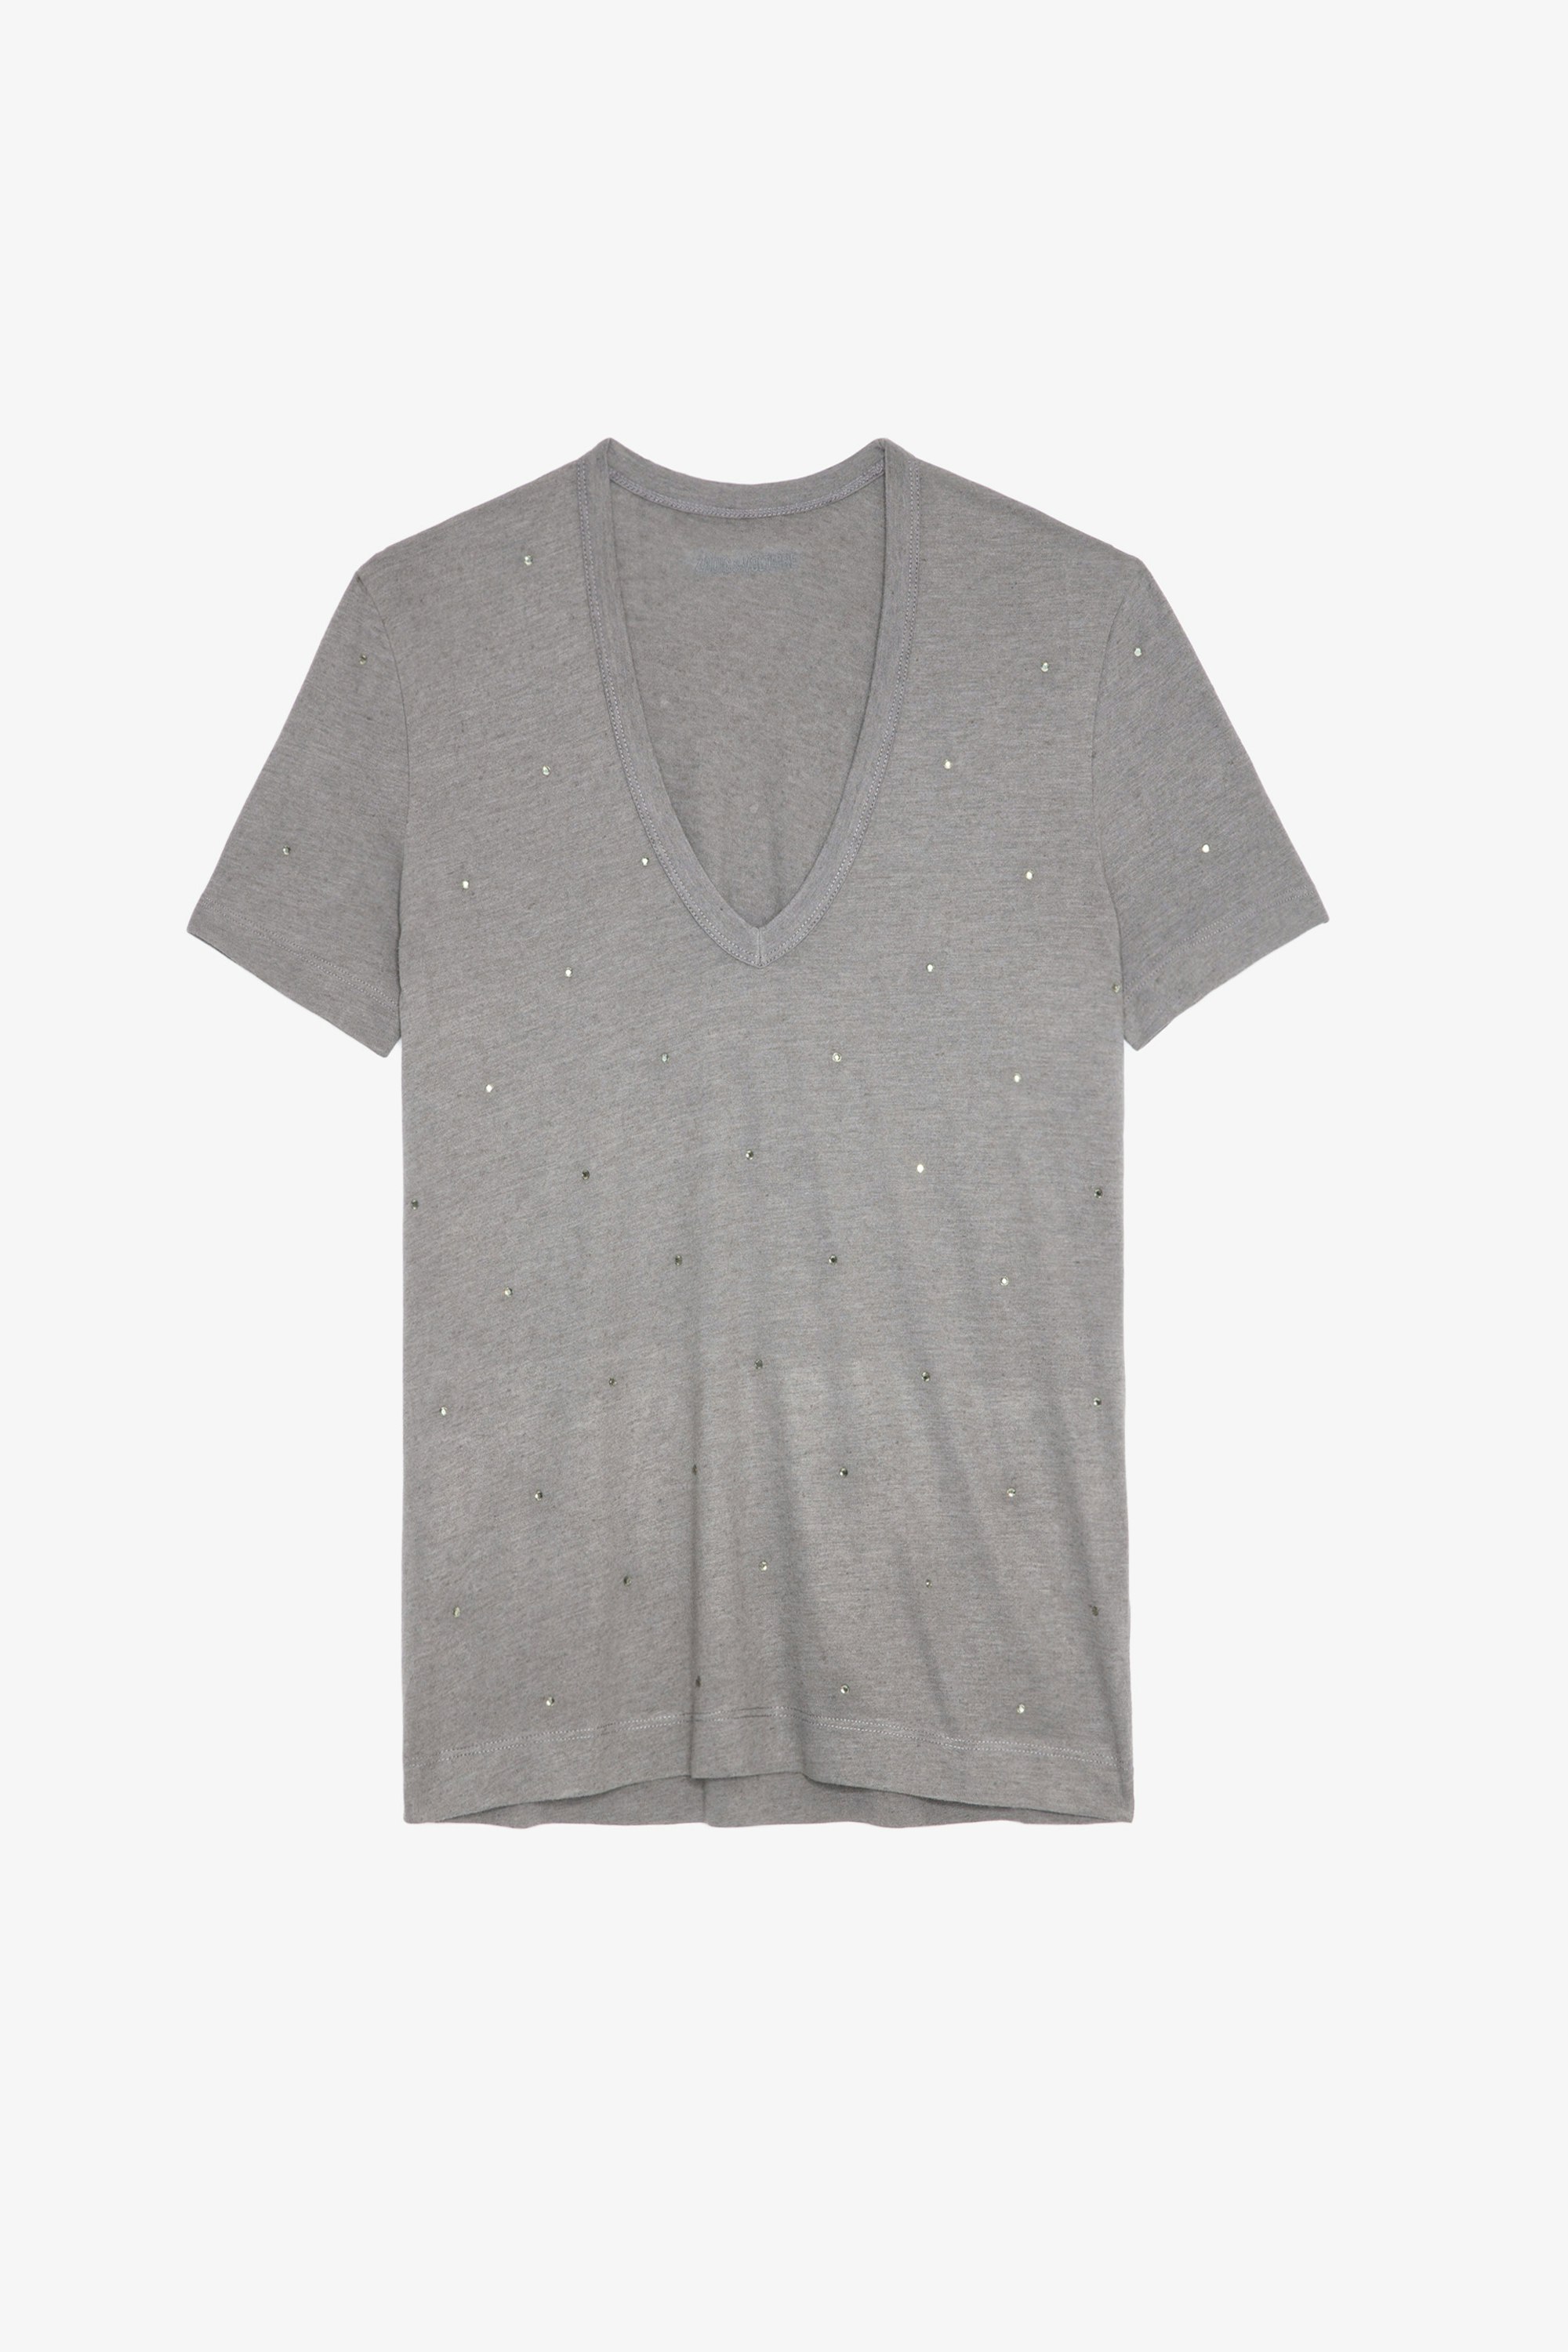 Wassa Diamanté T-shirt - Women’s grey T-shirt with diamanté.